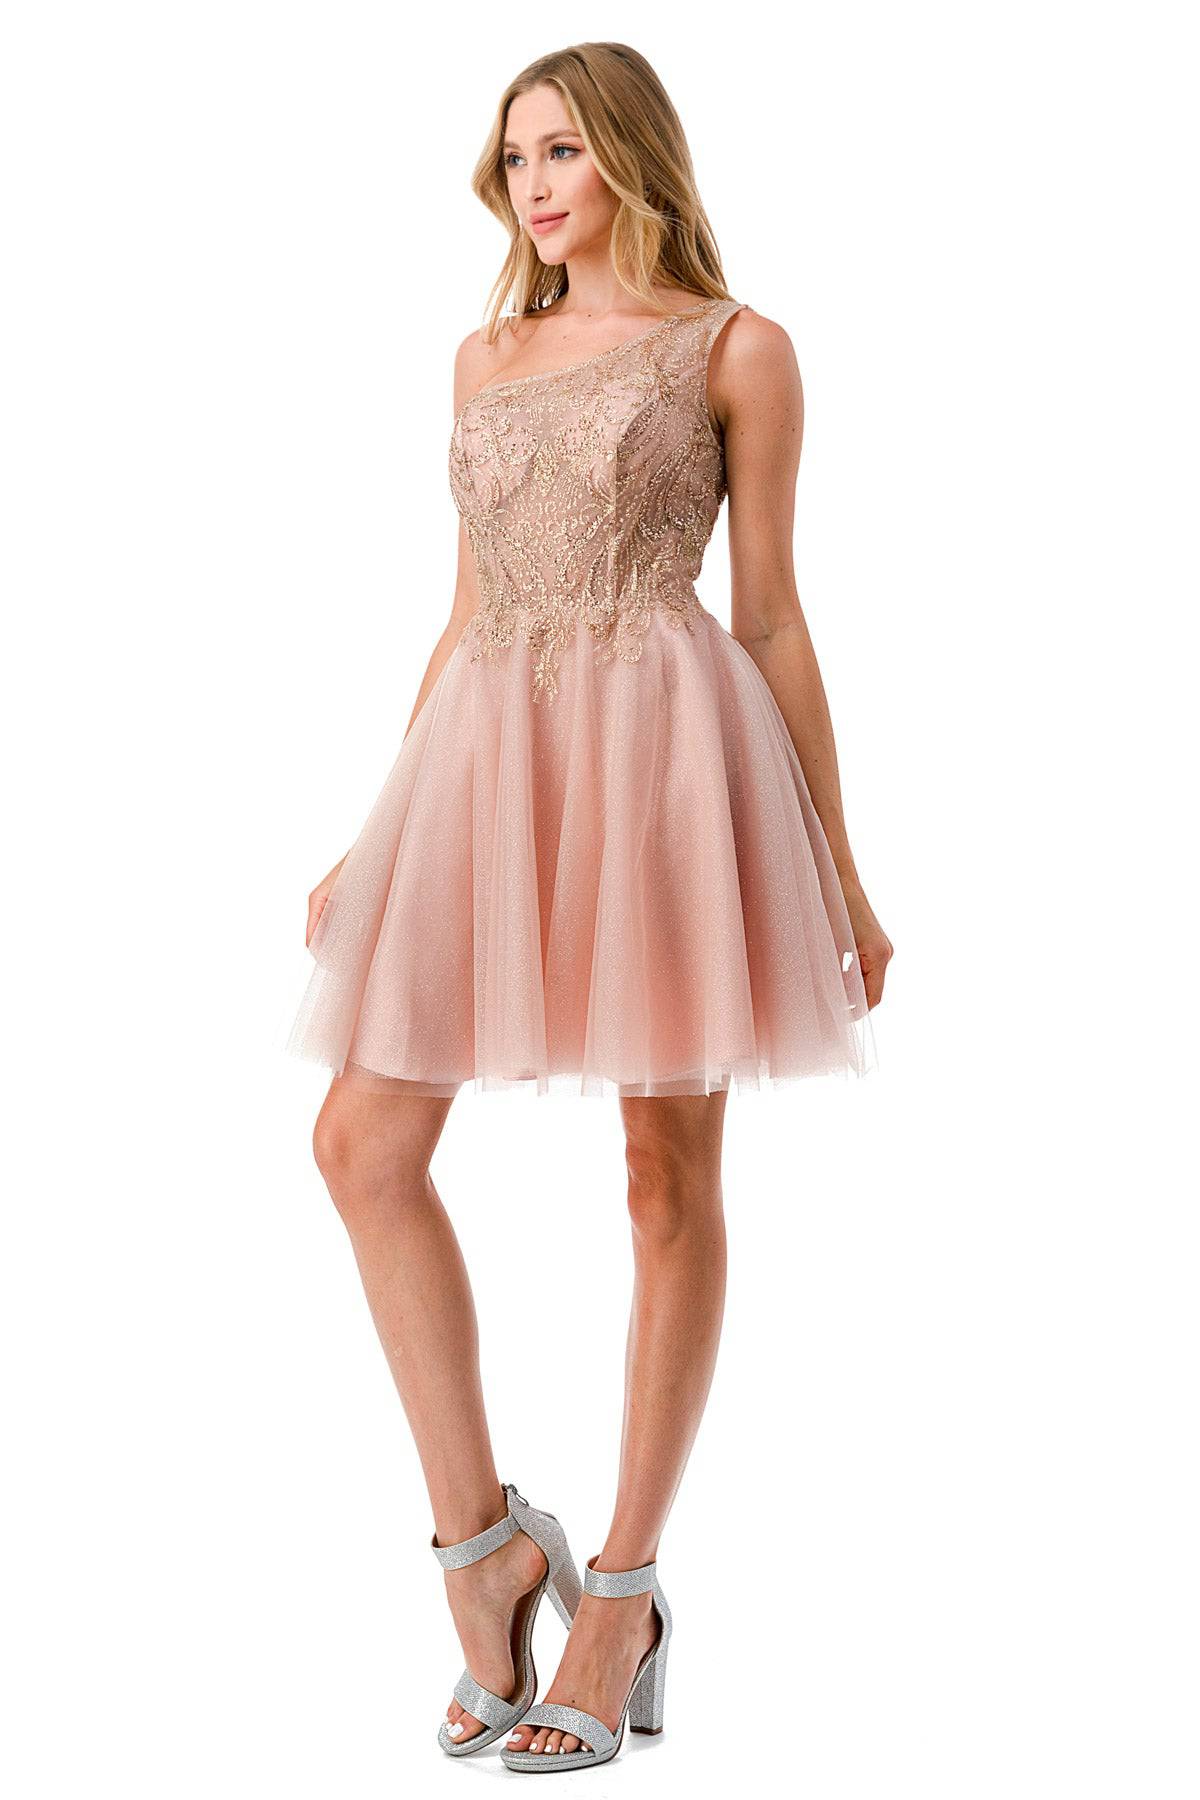 Aspeed S2746B Shimmering Rose Gold One Shoulder Short Dress - NORMA REED